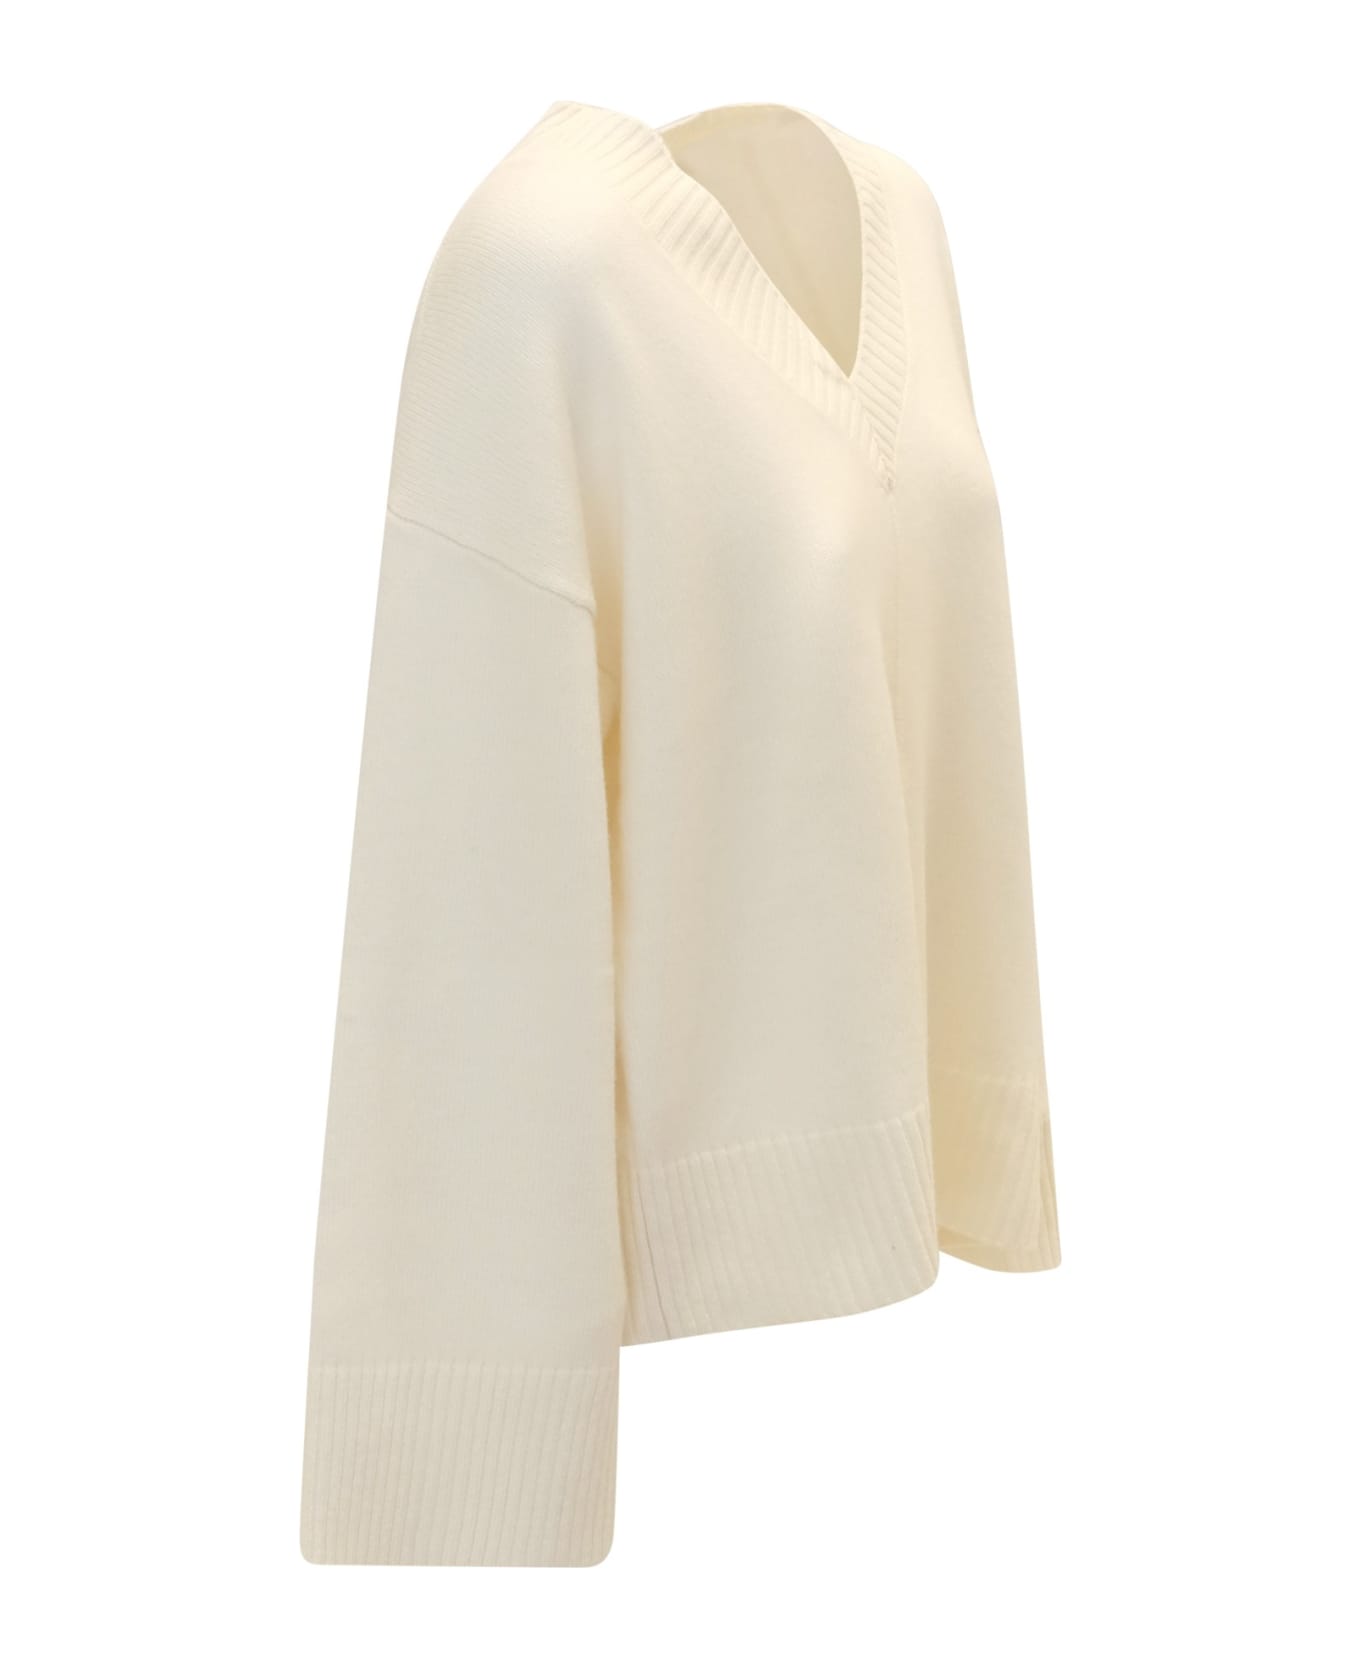 Parosh 002 Led White Sweater - WHITE